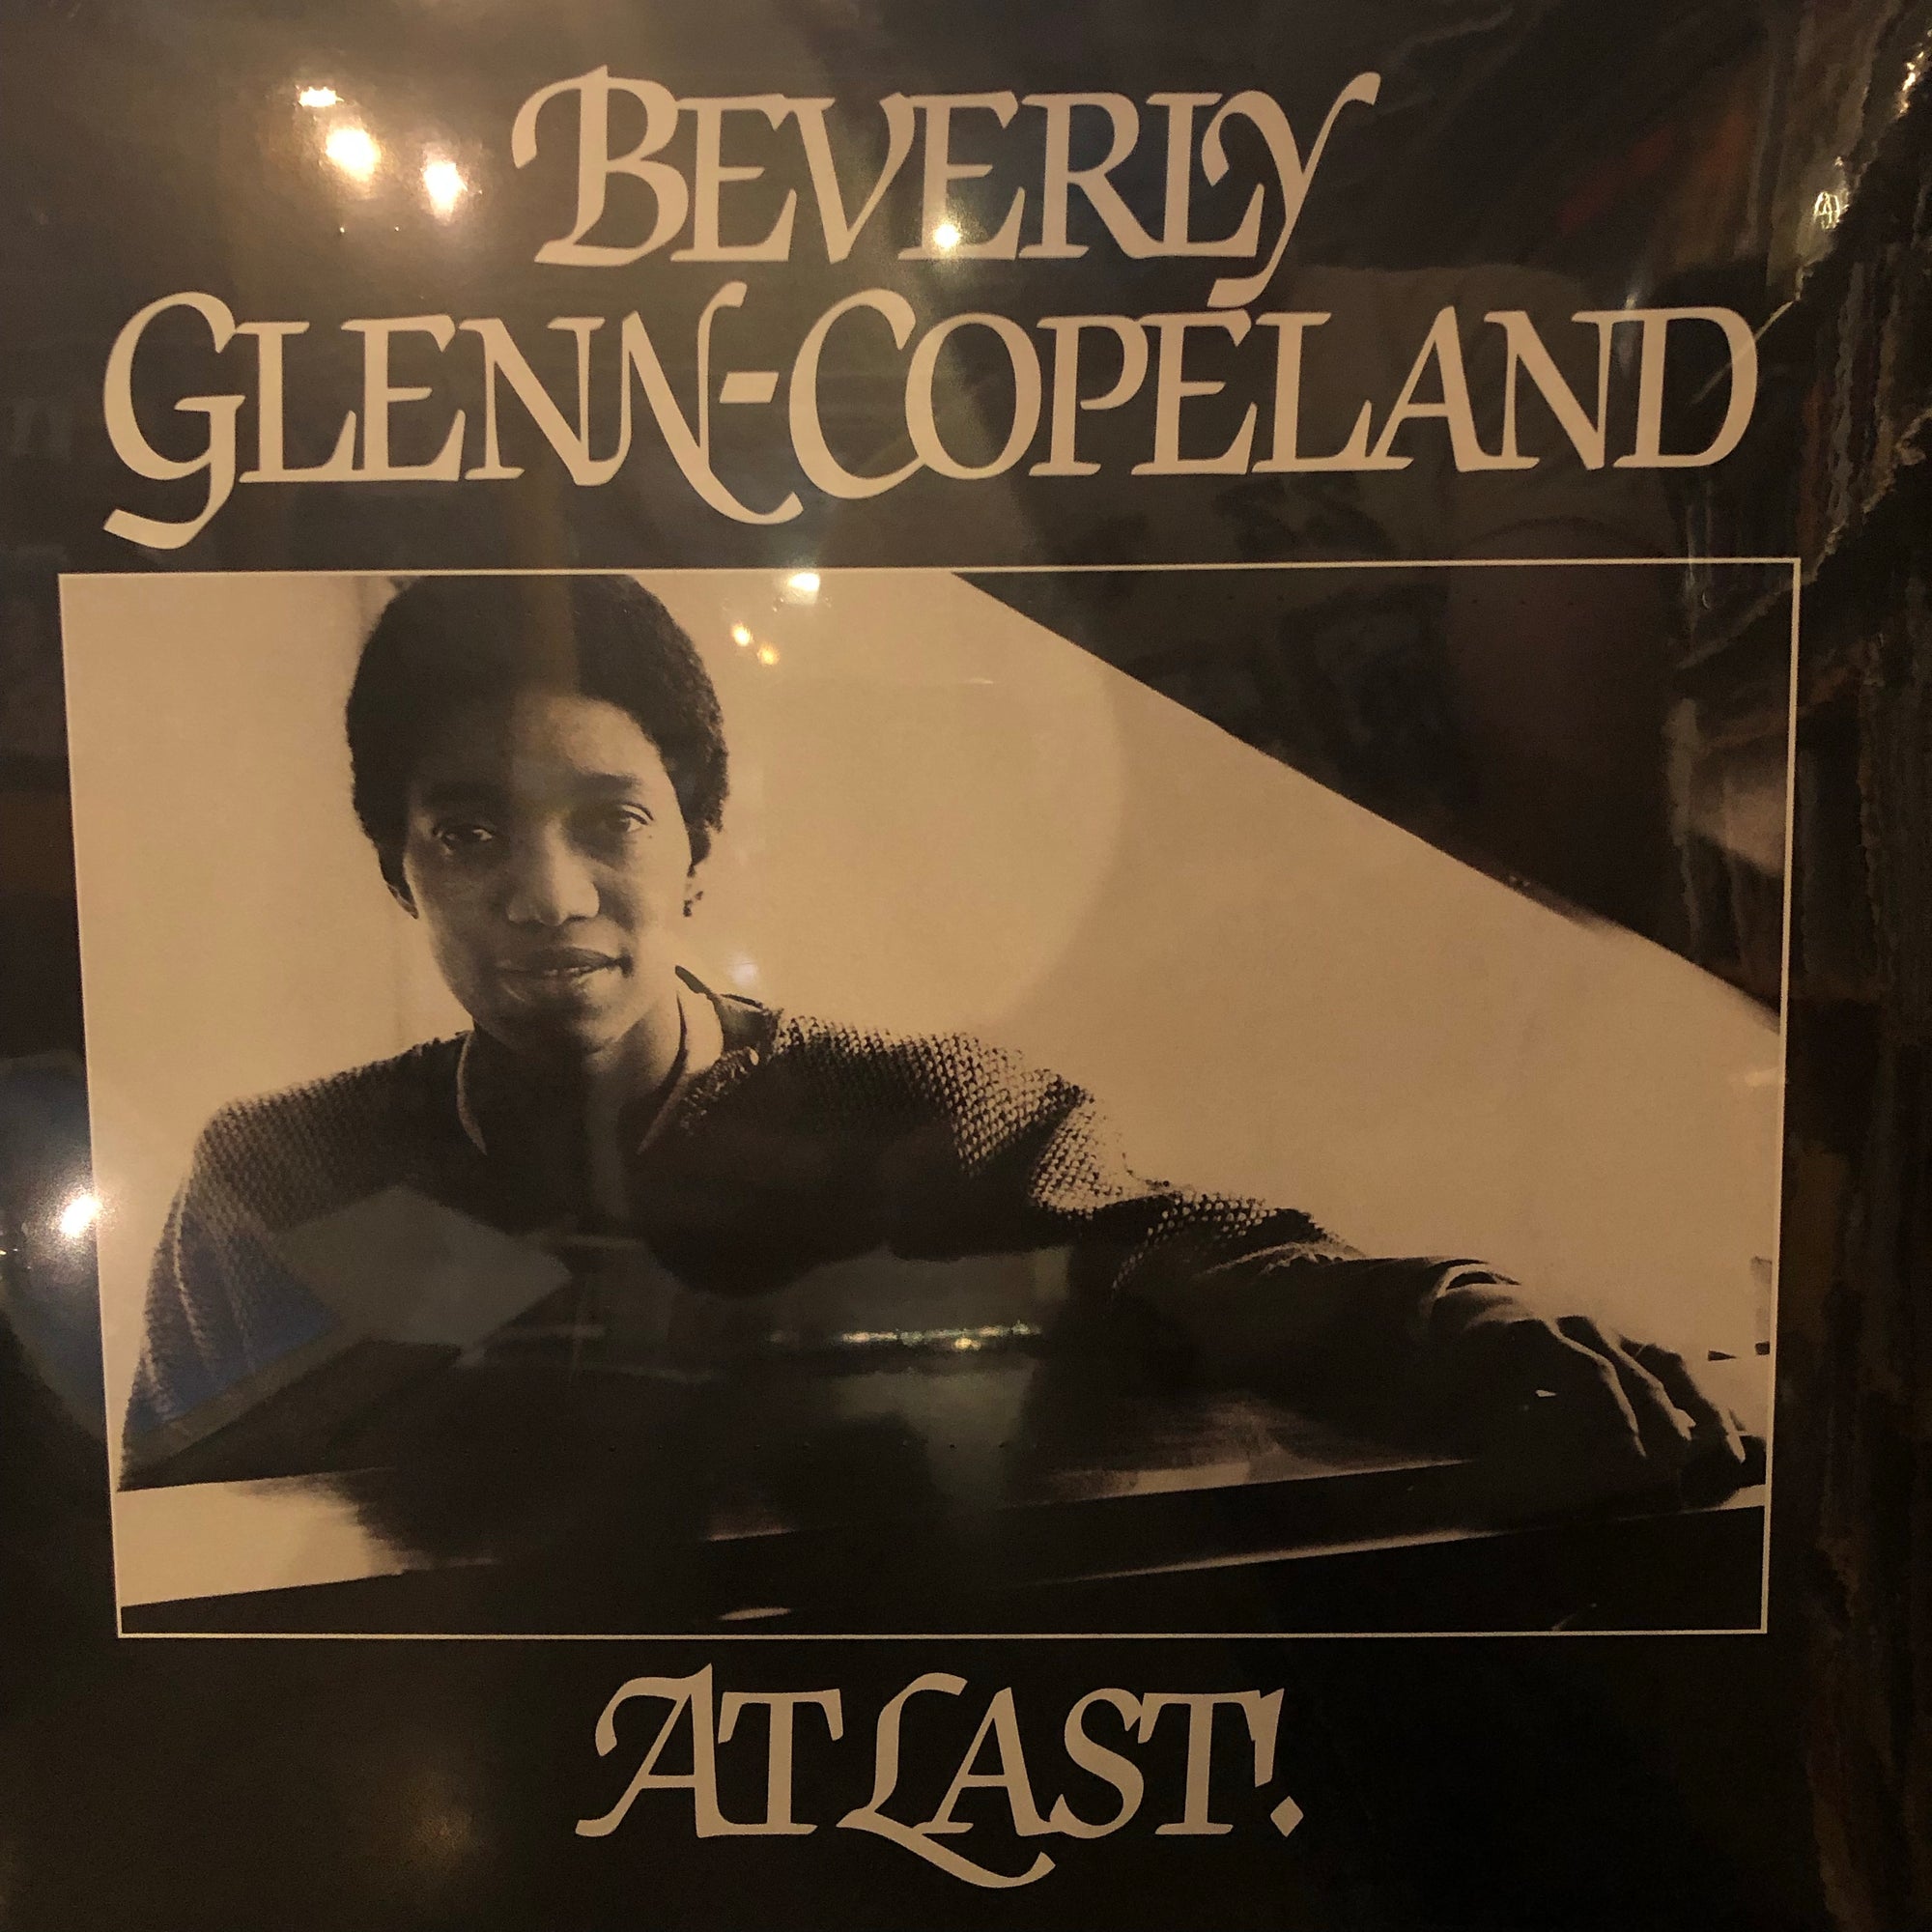 Beverly Glenn-Copeland - At Last! (Vinyl EP)